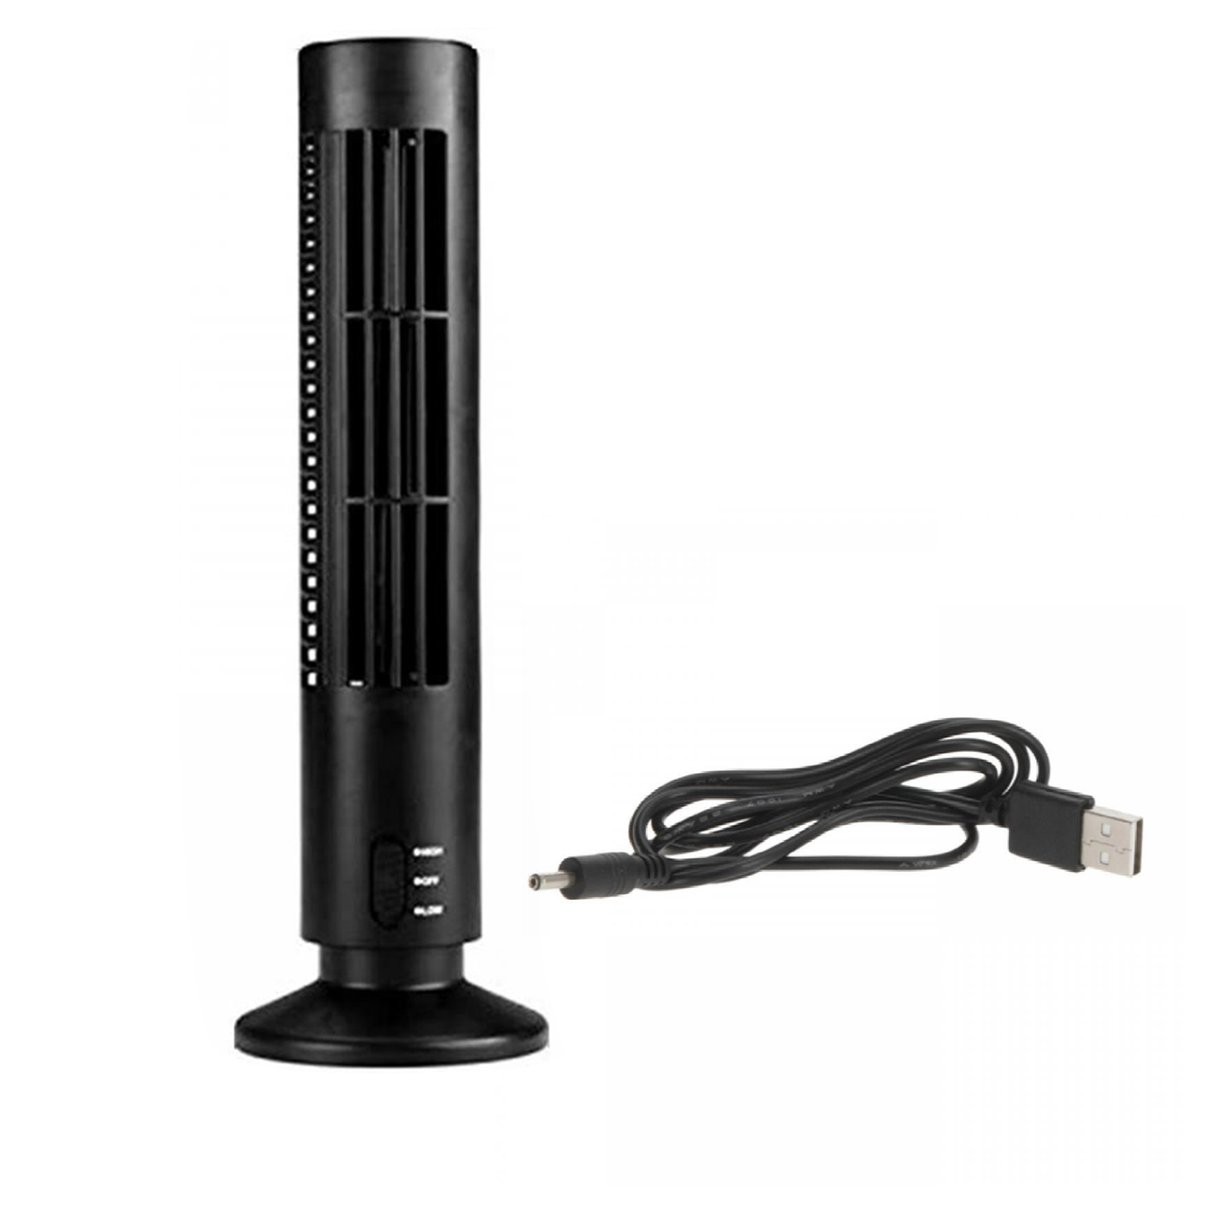 Portable USB Tower Fan PC Laptop Desktop Cooling Fan Bladeless Air Conditioner